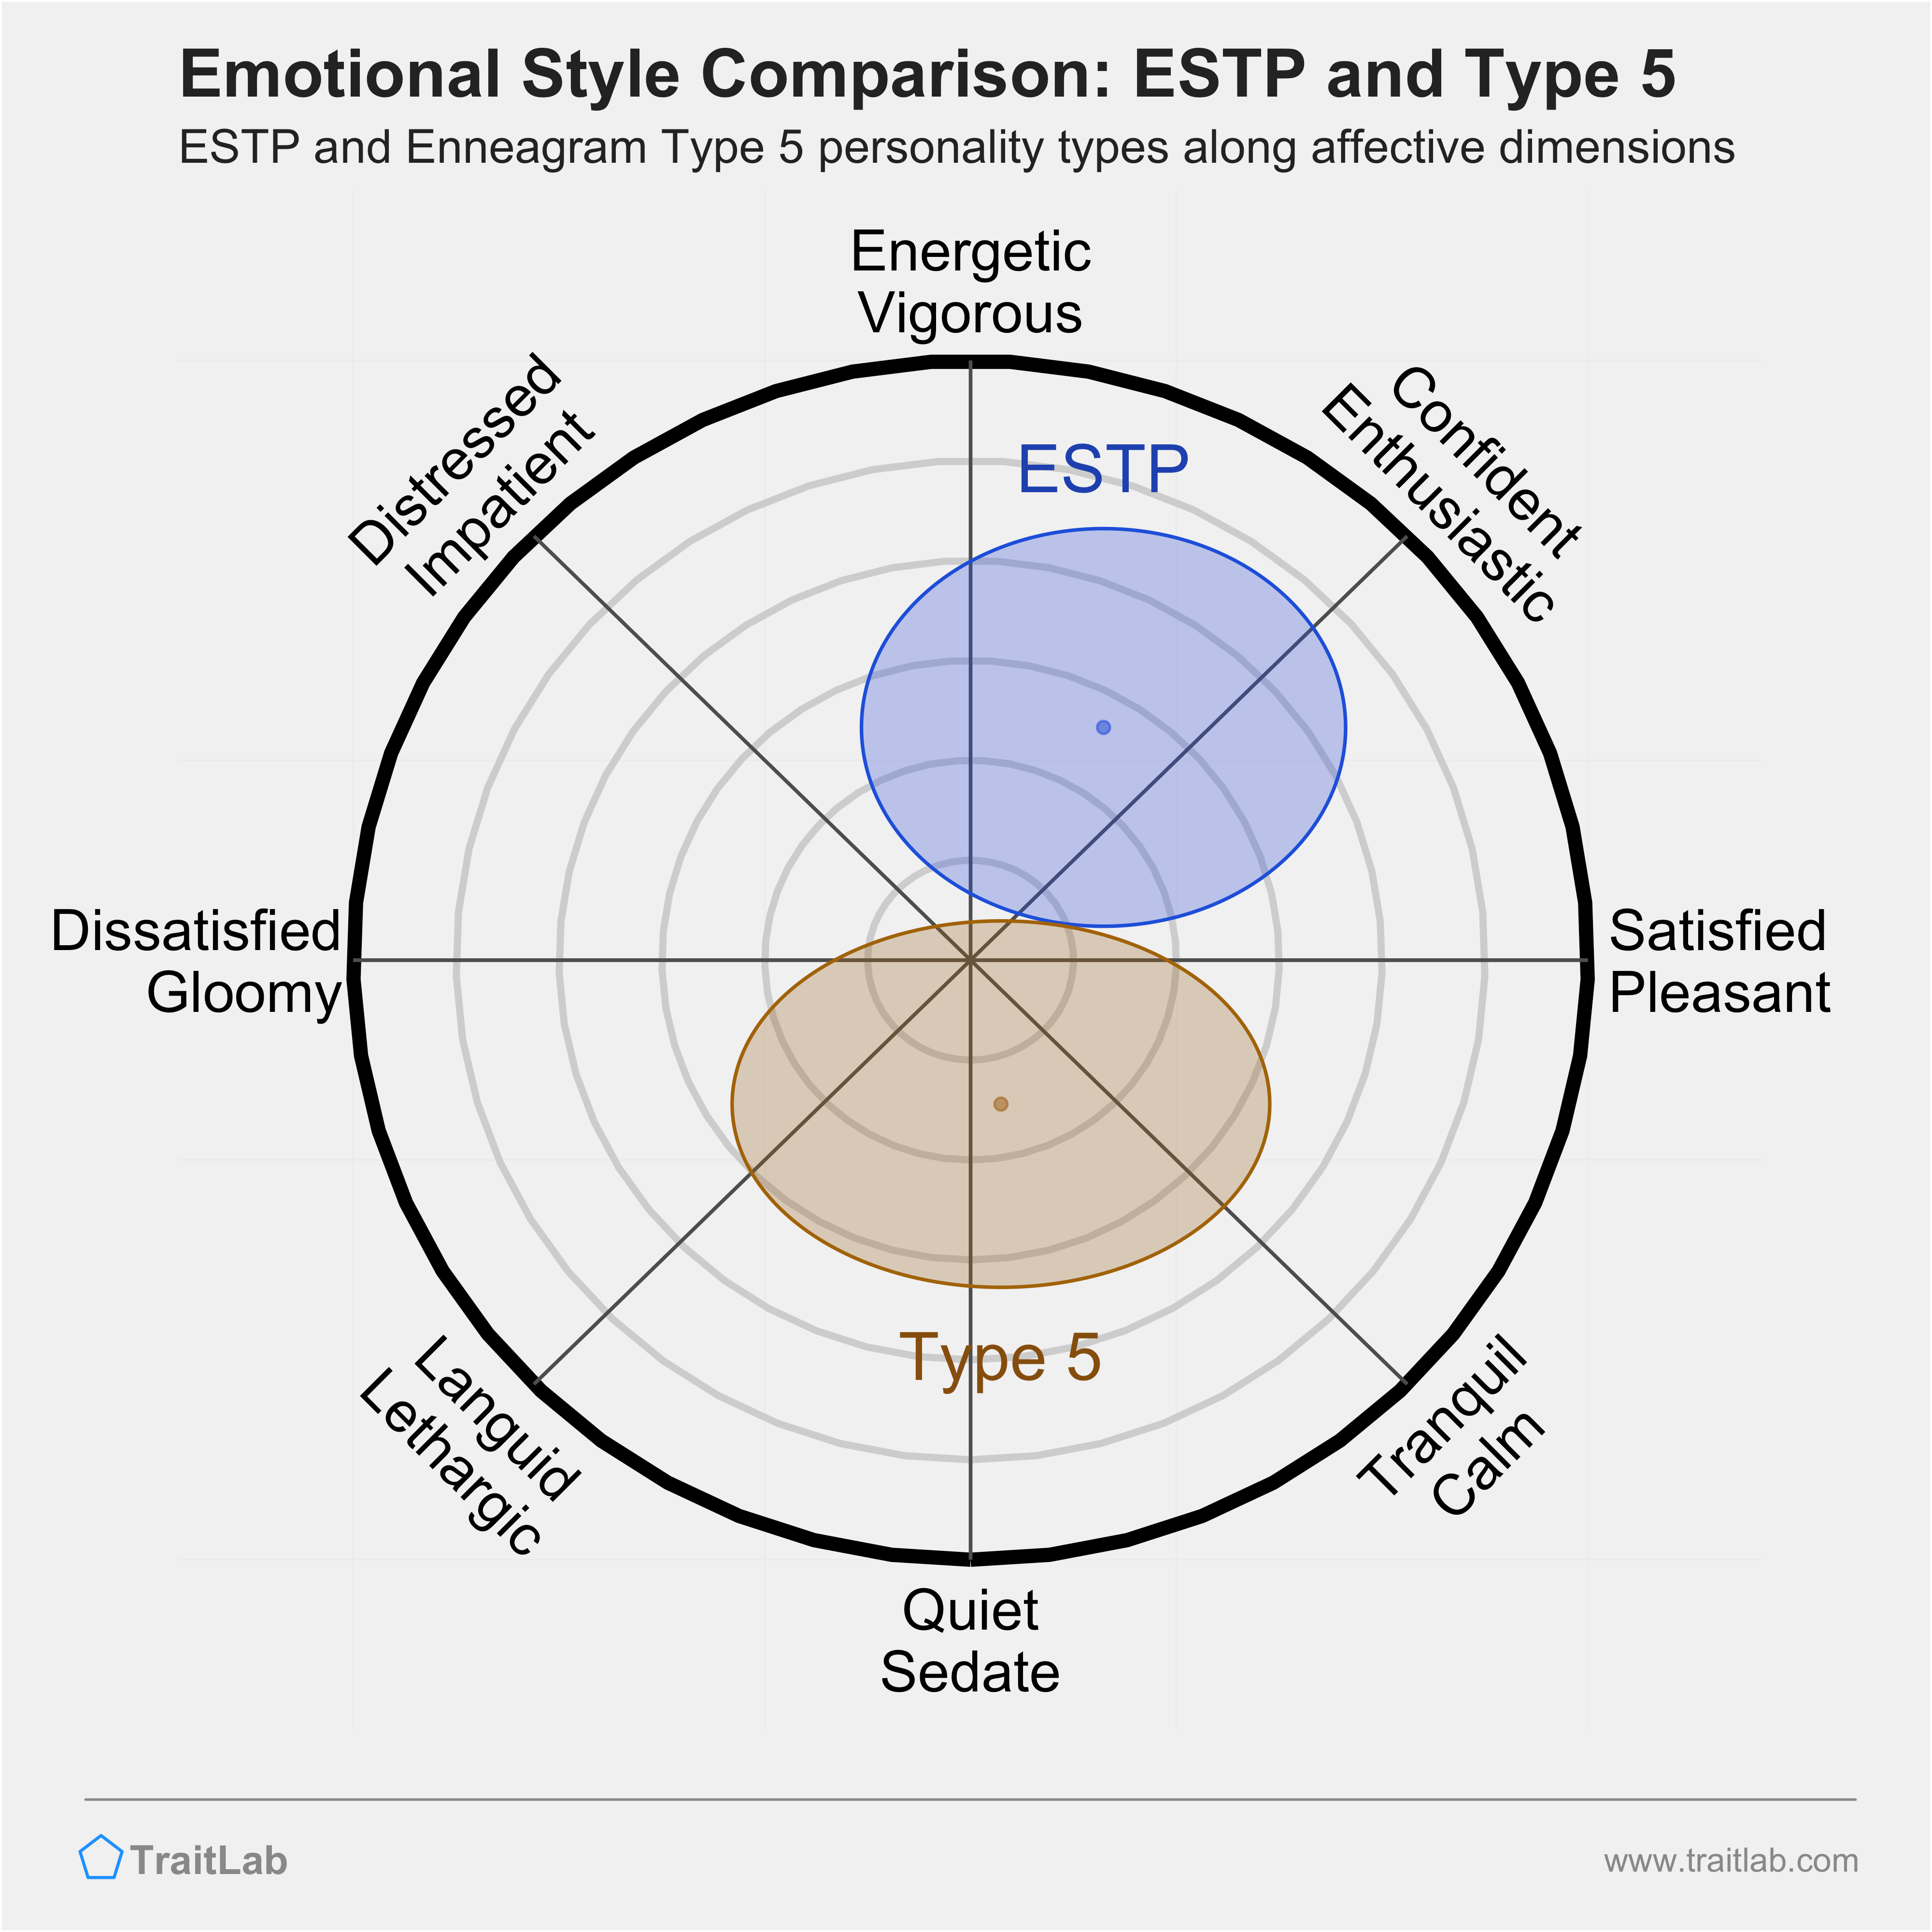 ESTP and Type 5 comparison across emotional (affective) dimensions